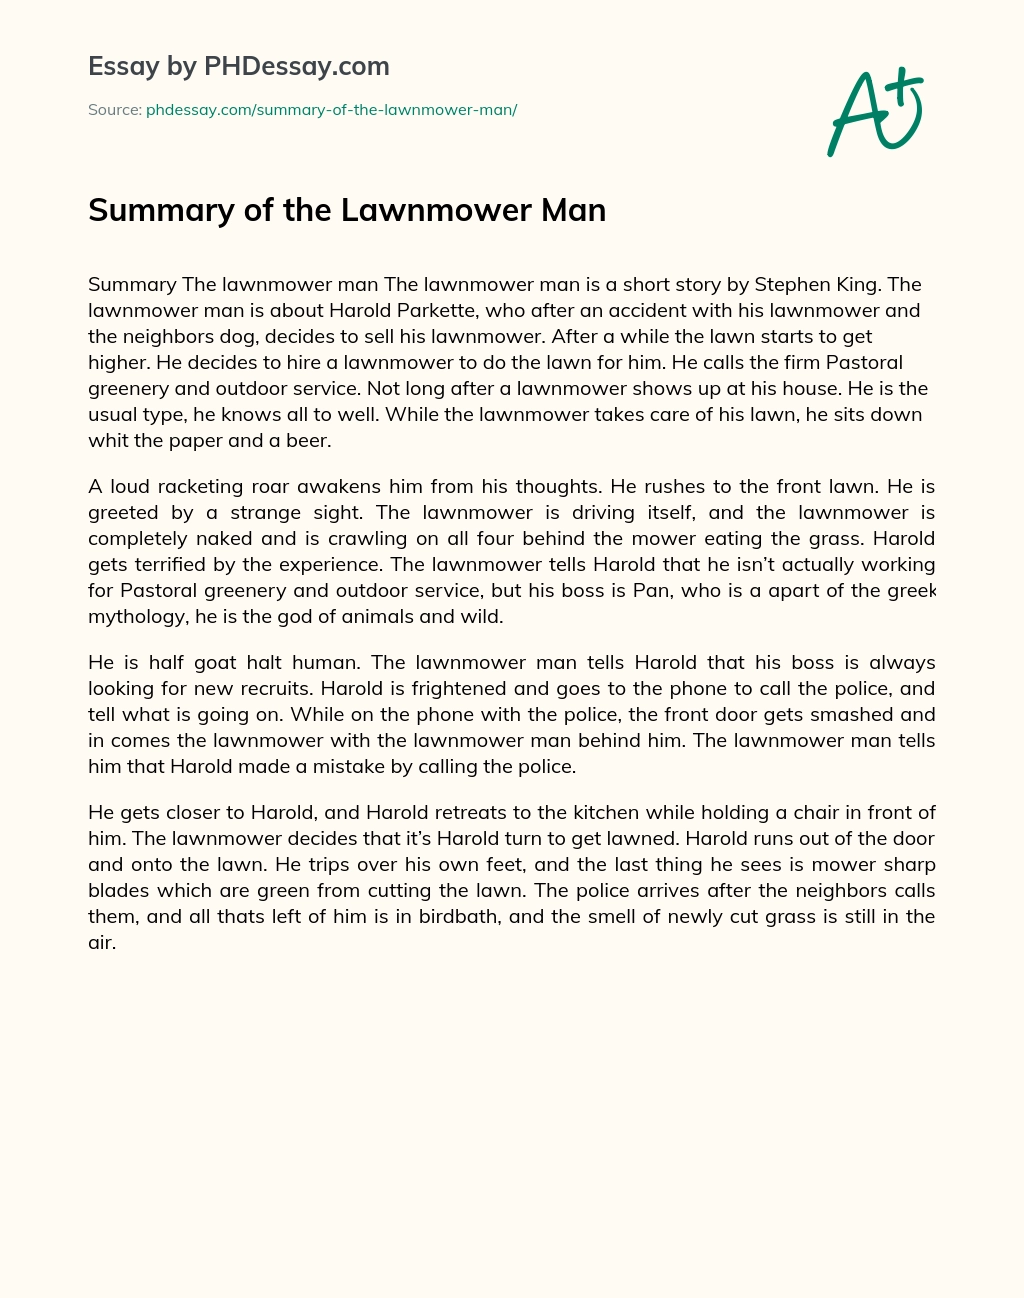 Summary of the Lawnmower Man essay